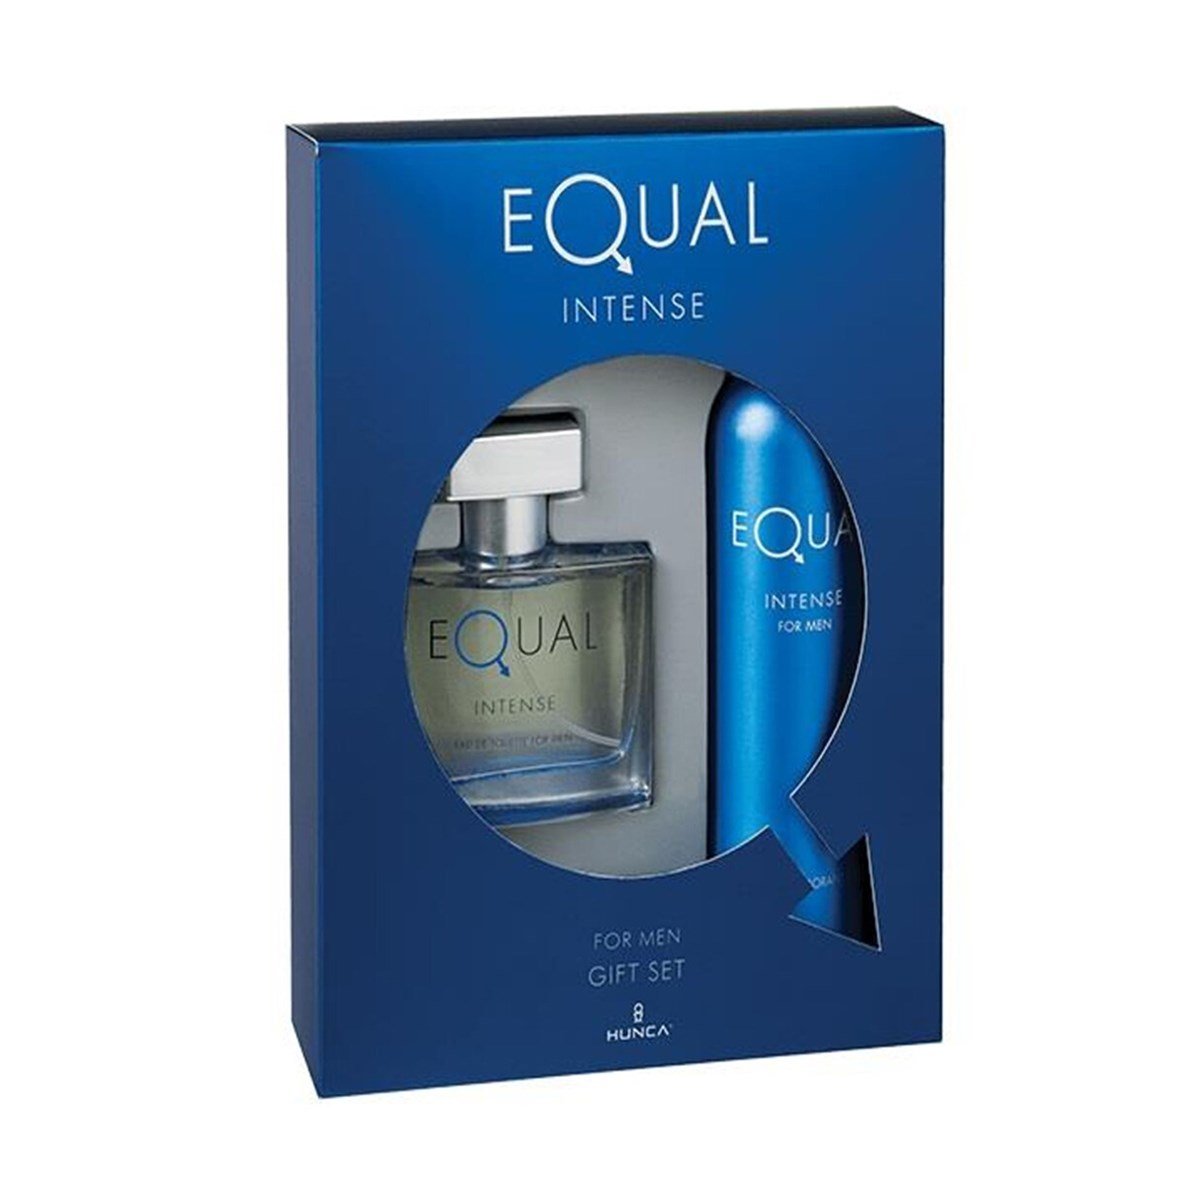 Equal Parfüm Intense Edt For Men 75ml + Equal Deodorant Intense For Men  150ml - Platin